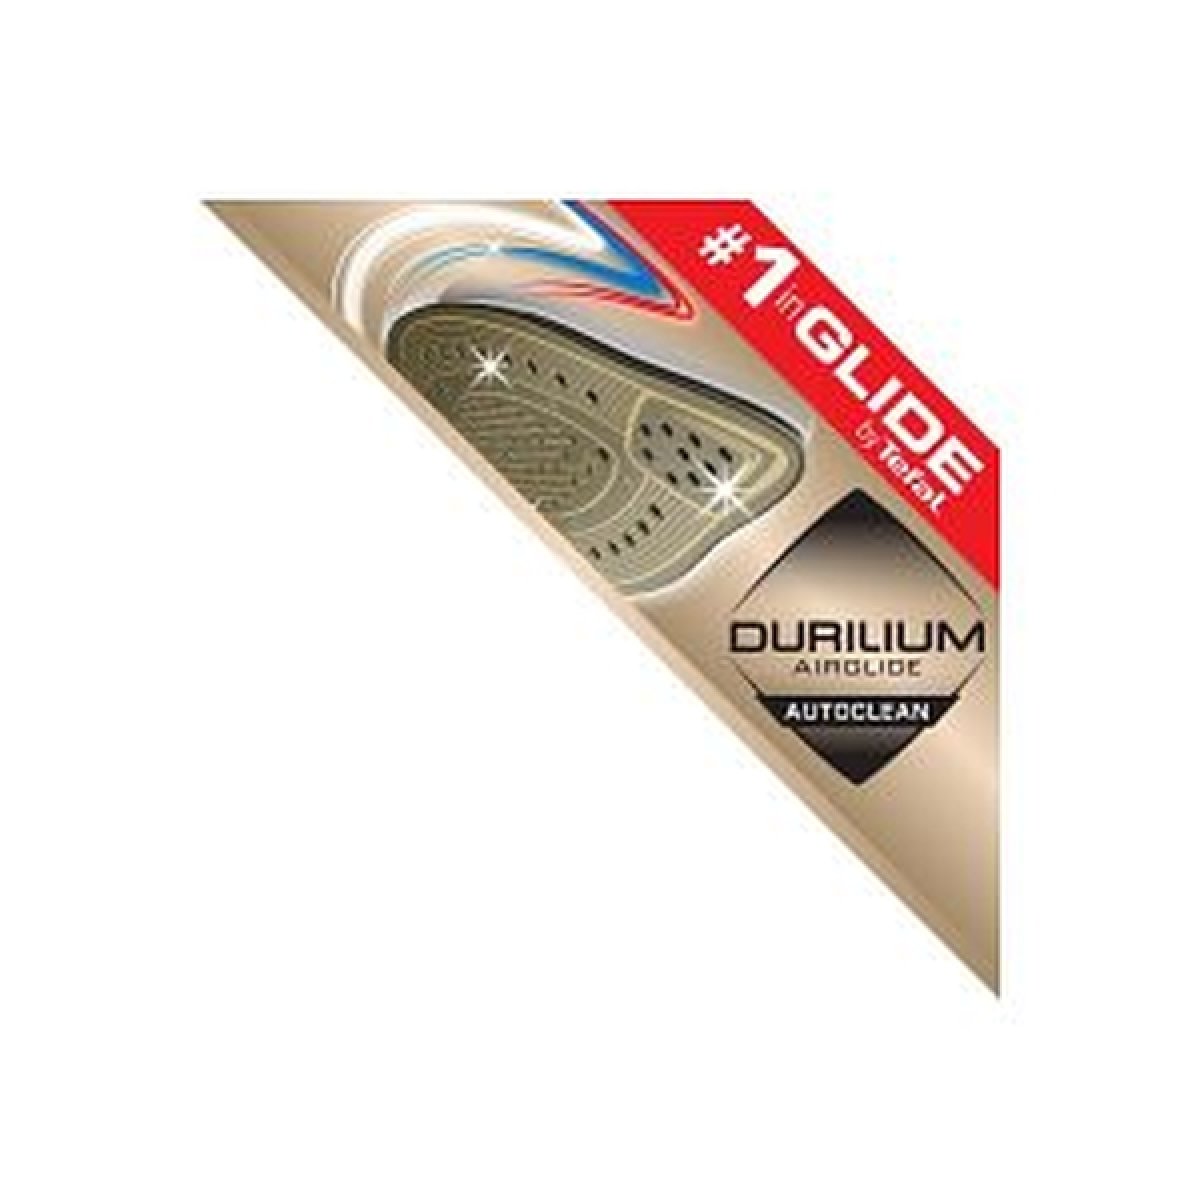 Žehlicí deska Durilium AirGlide Autoclean: Jednička v kluznosti